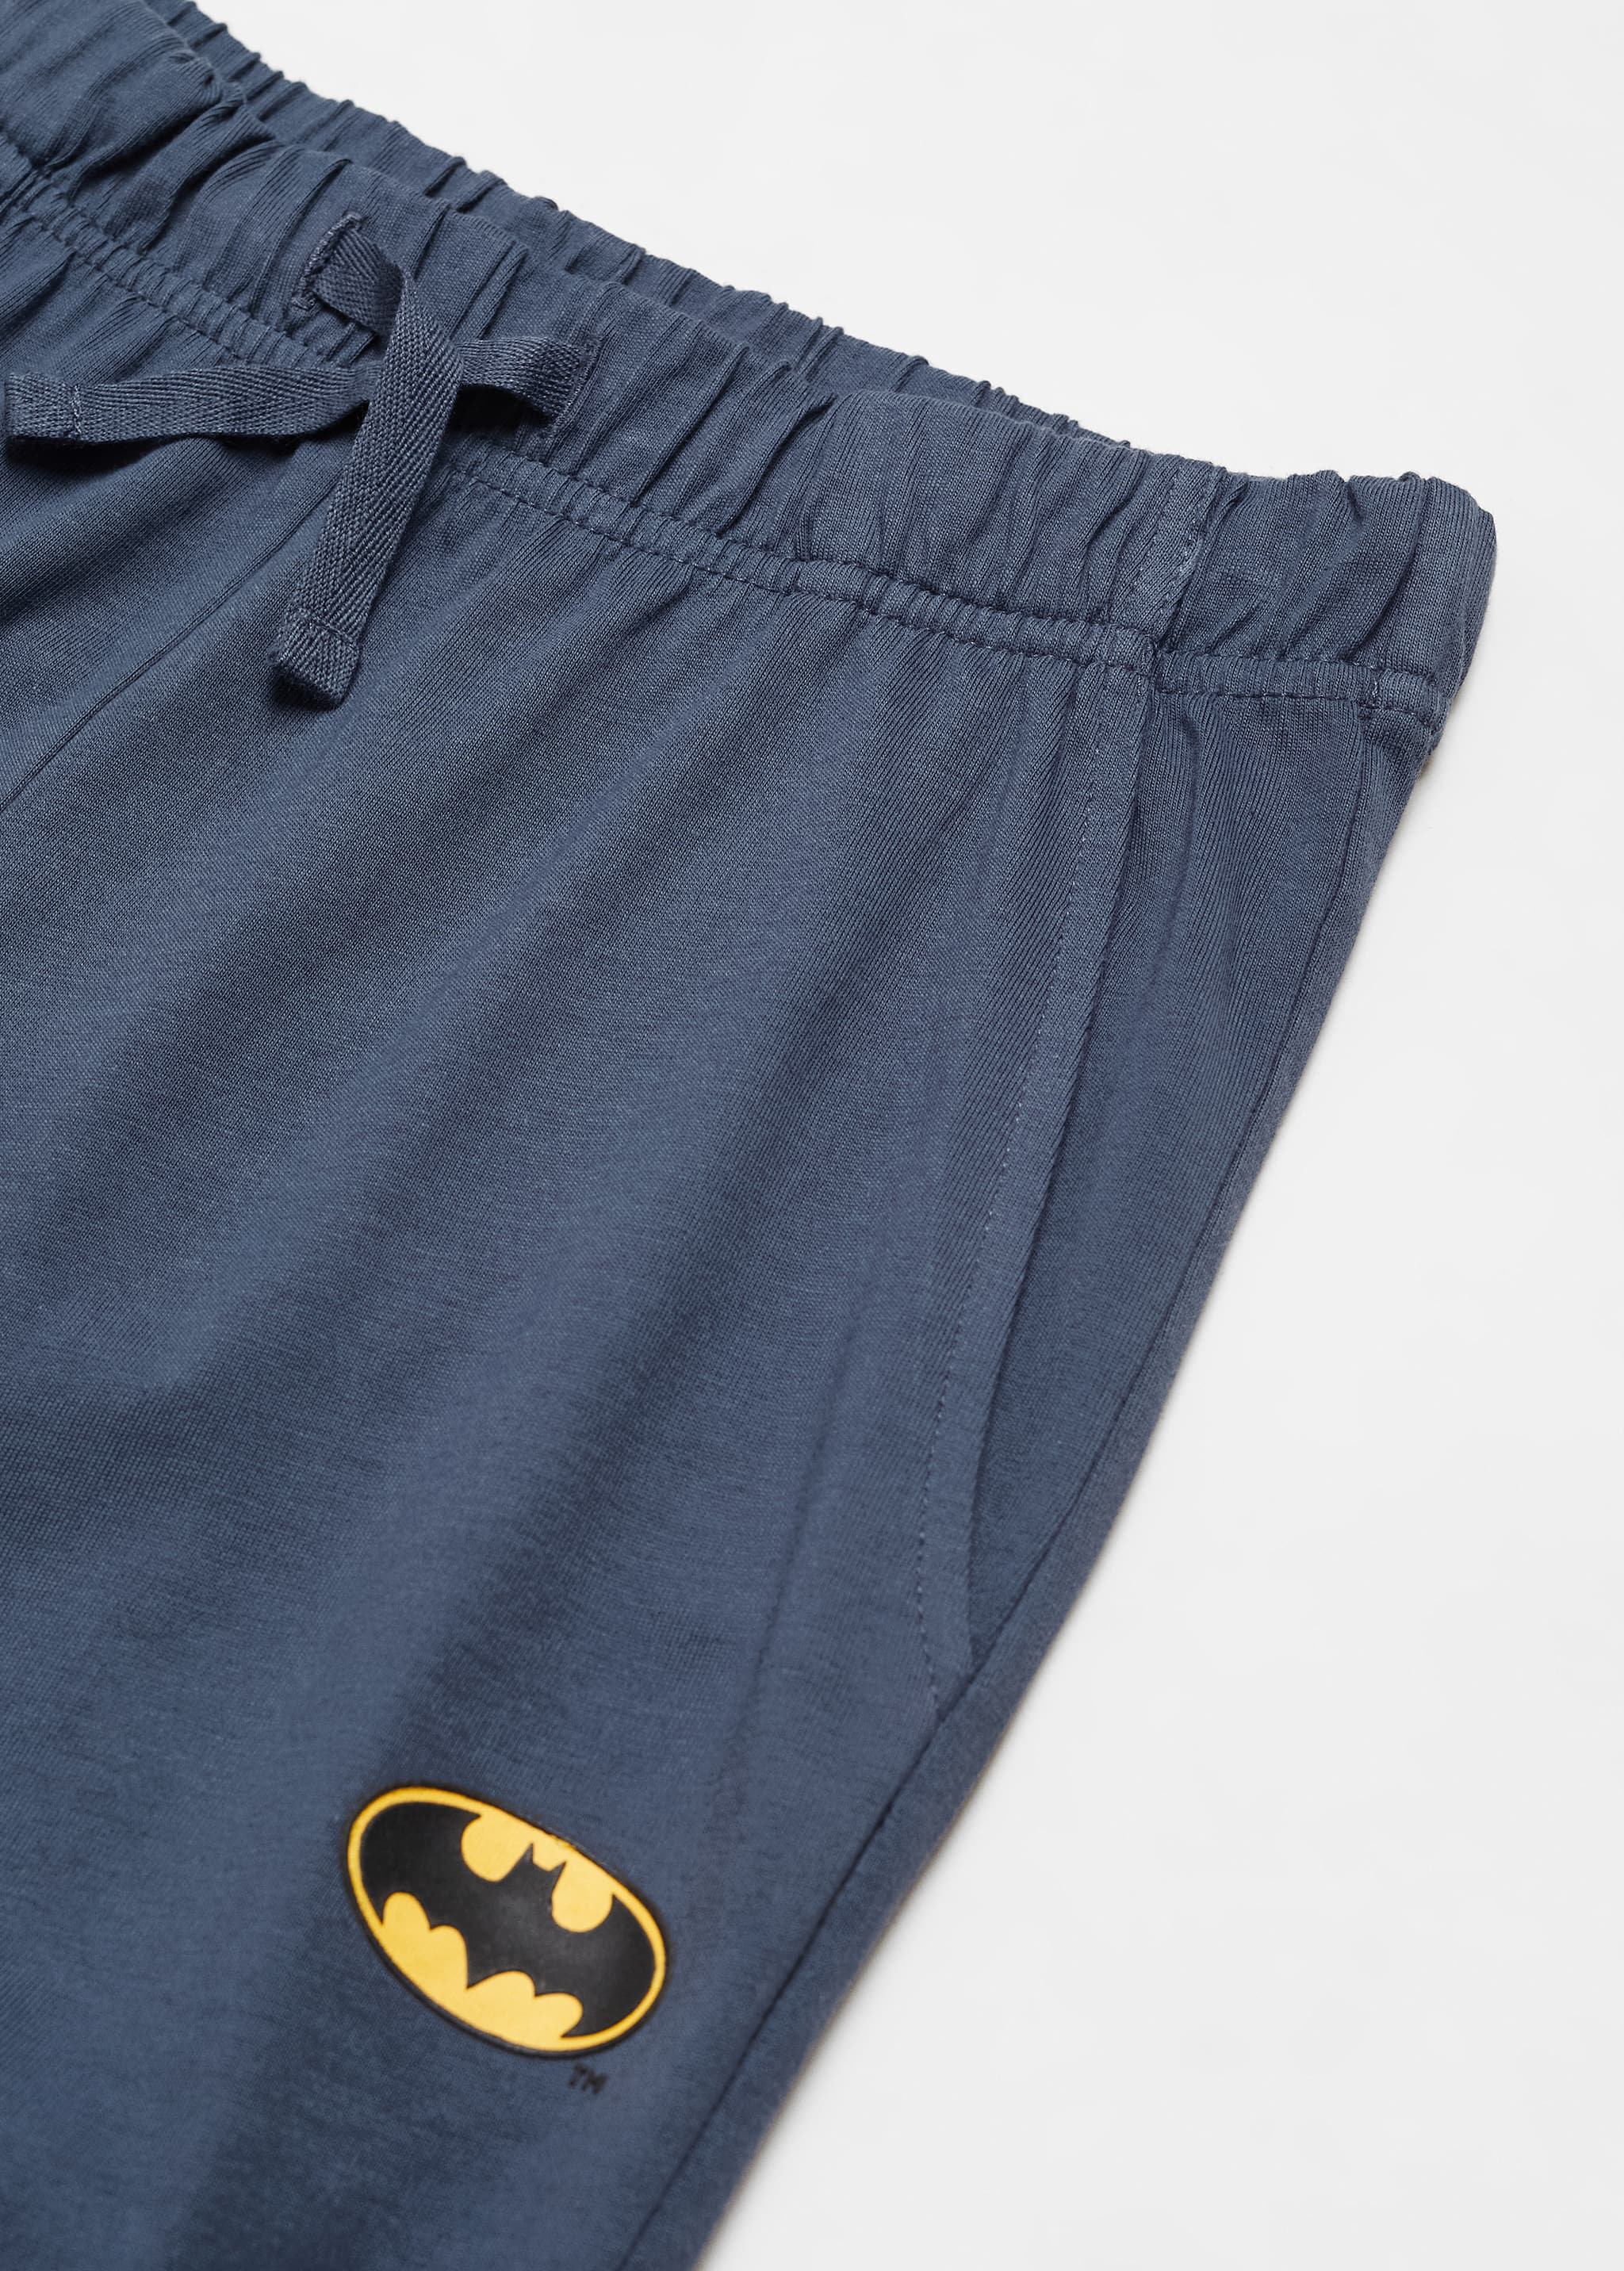 Long Batman pyjamas - Details of the article 0